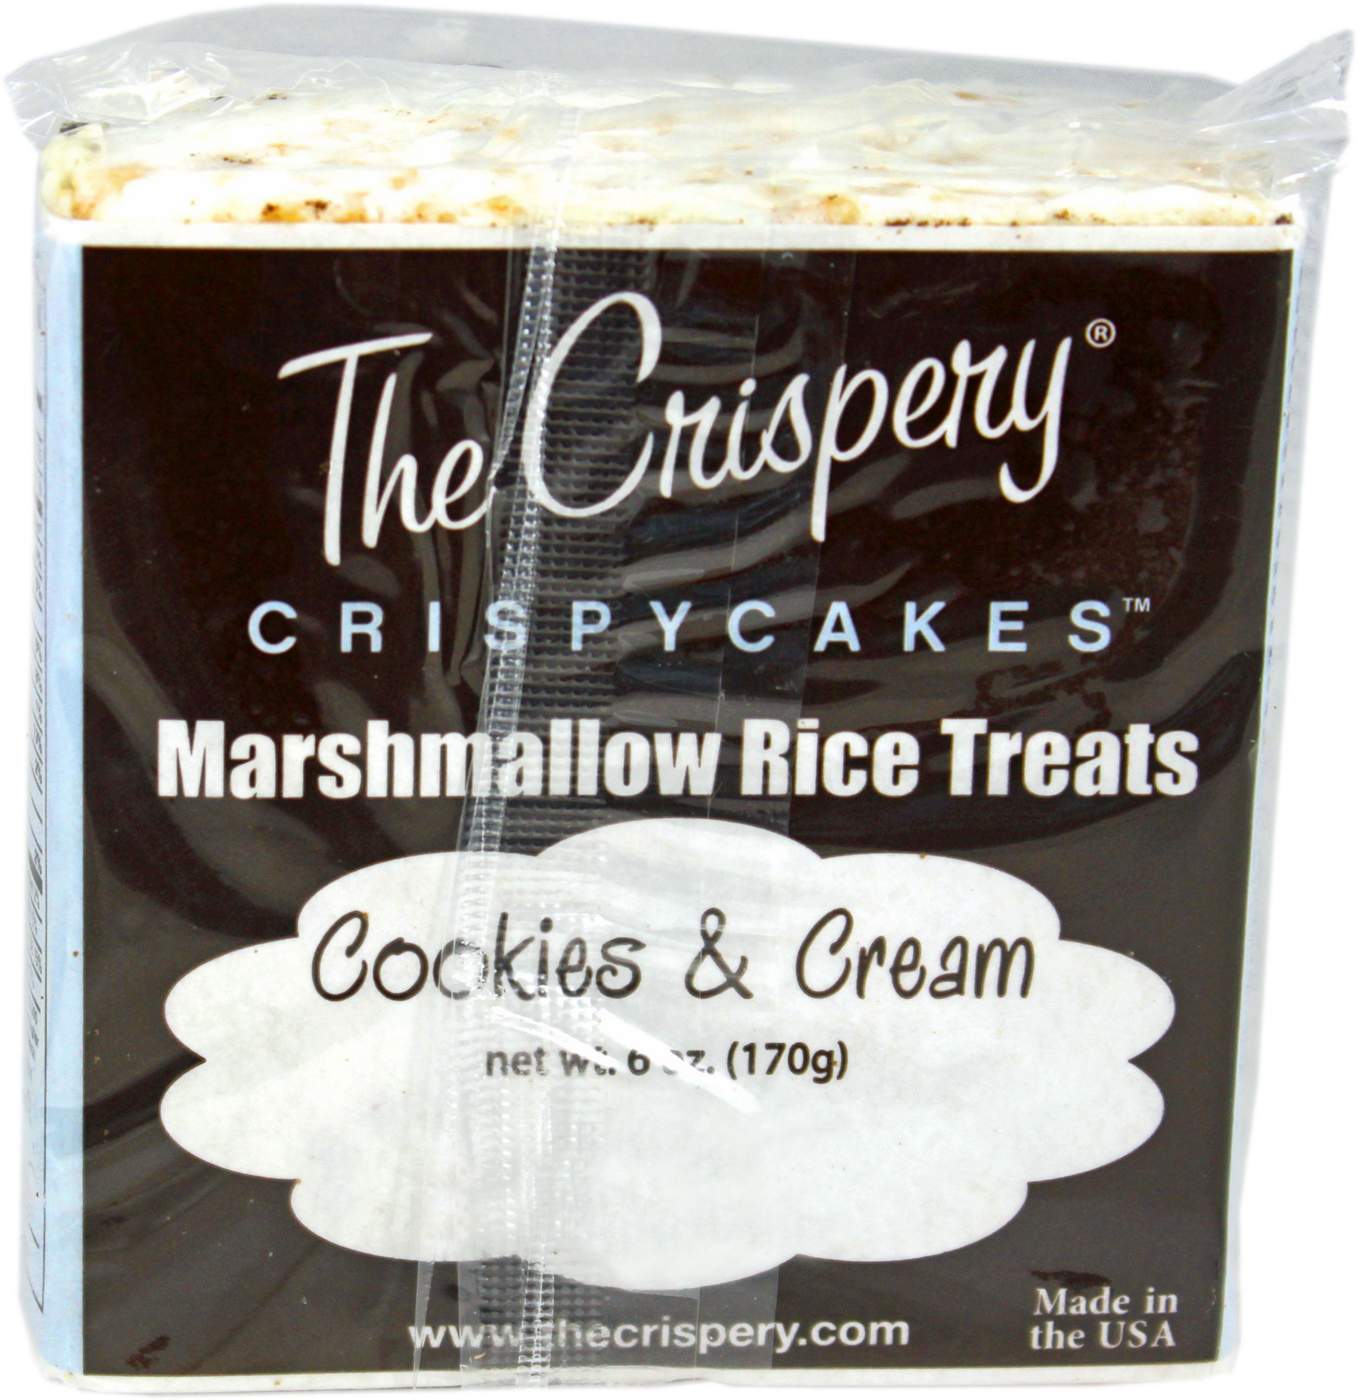 The Crispery Crispycakes Marshmallow Rice Treats, Cookies & Cream; image 1 of 2